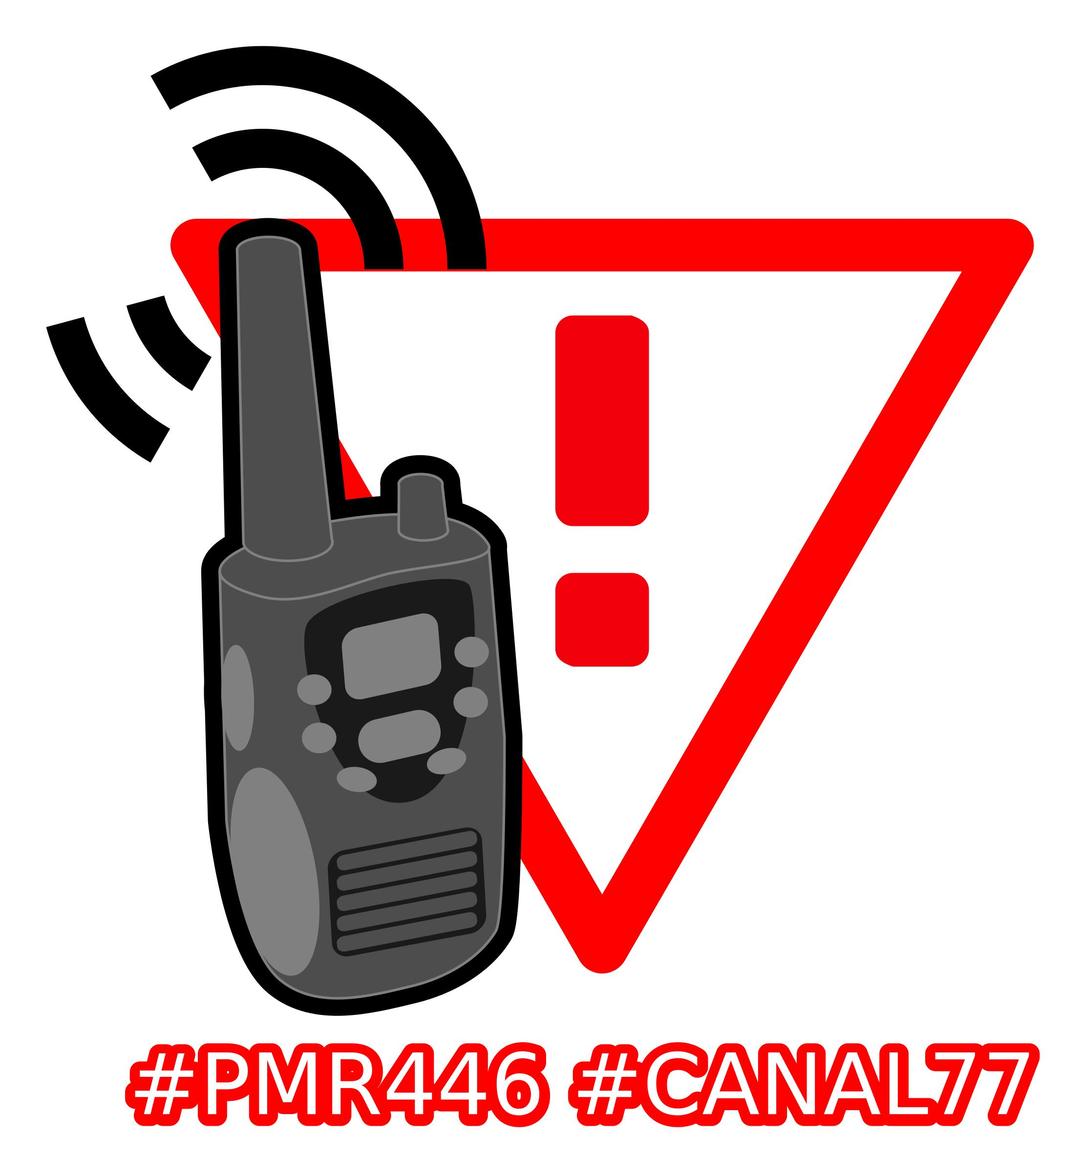 Walkie Talkie #PMR446 #canal77 png transparent